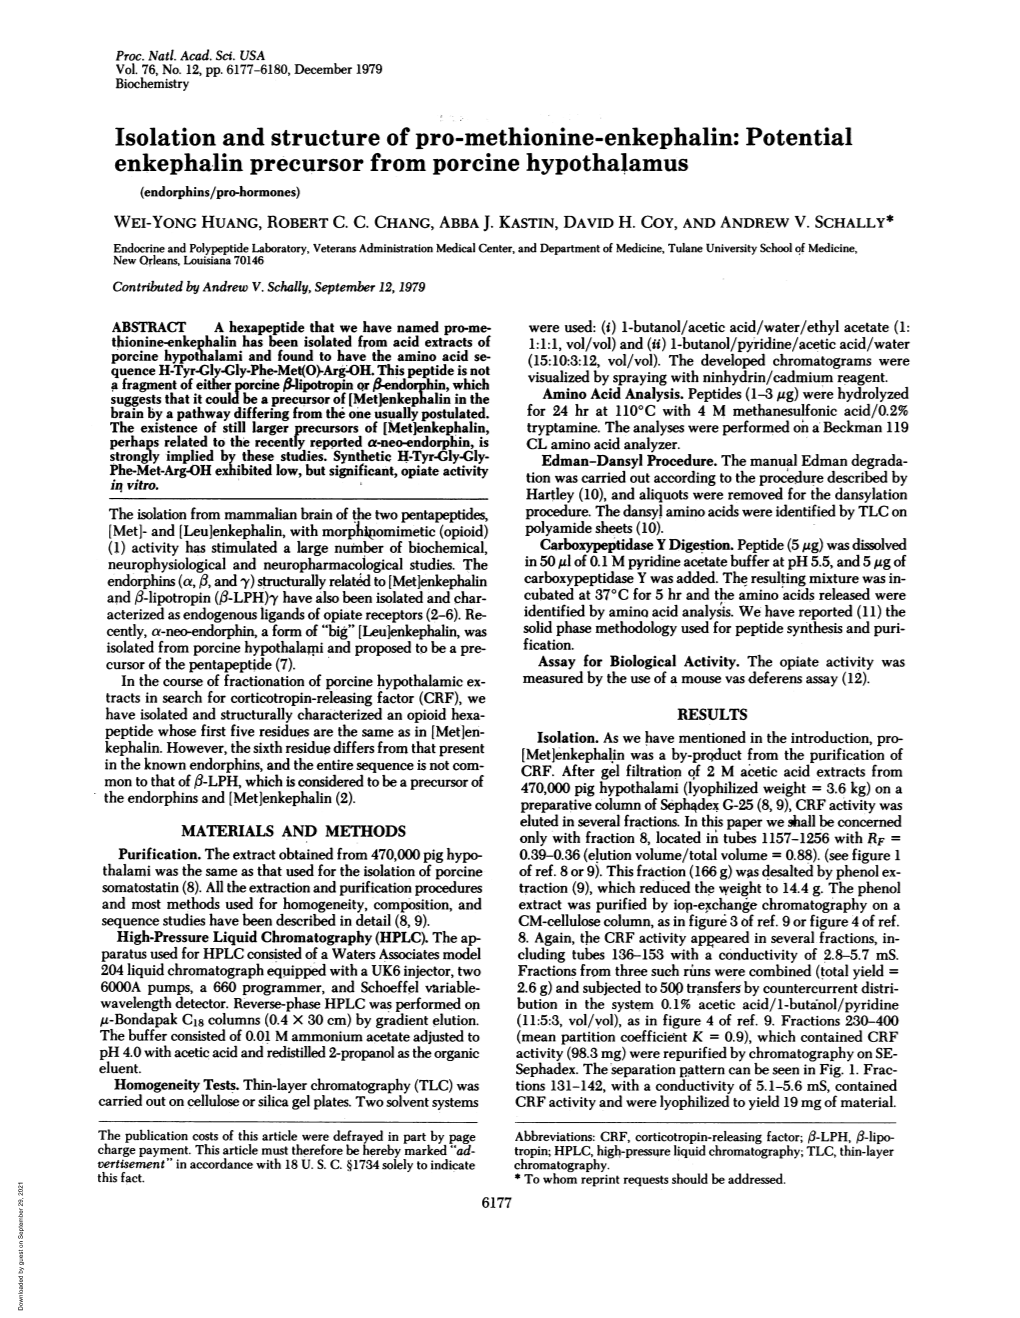 Isolation and Structure of Pro-Methionine-Enkephalin: Potential Enkephalin Precursor from Porcine Hypothalamus (Endorphins/Pro-Hormones) WEI-YONG HUANG, ROBERT C